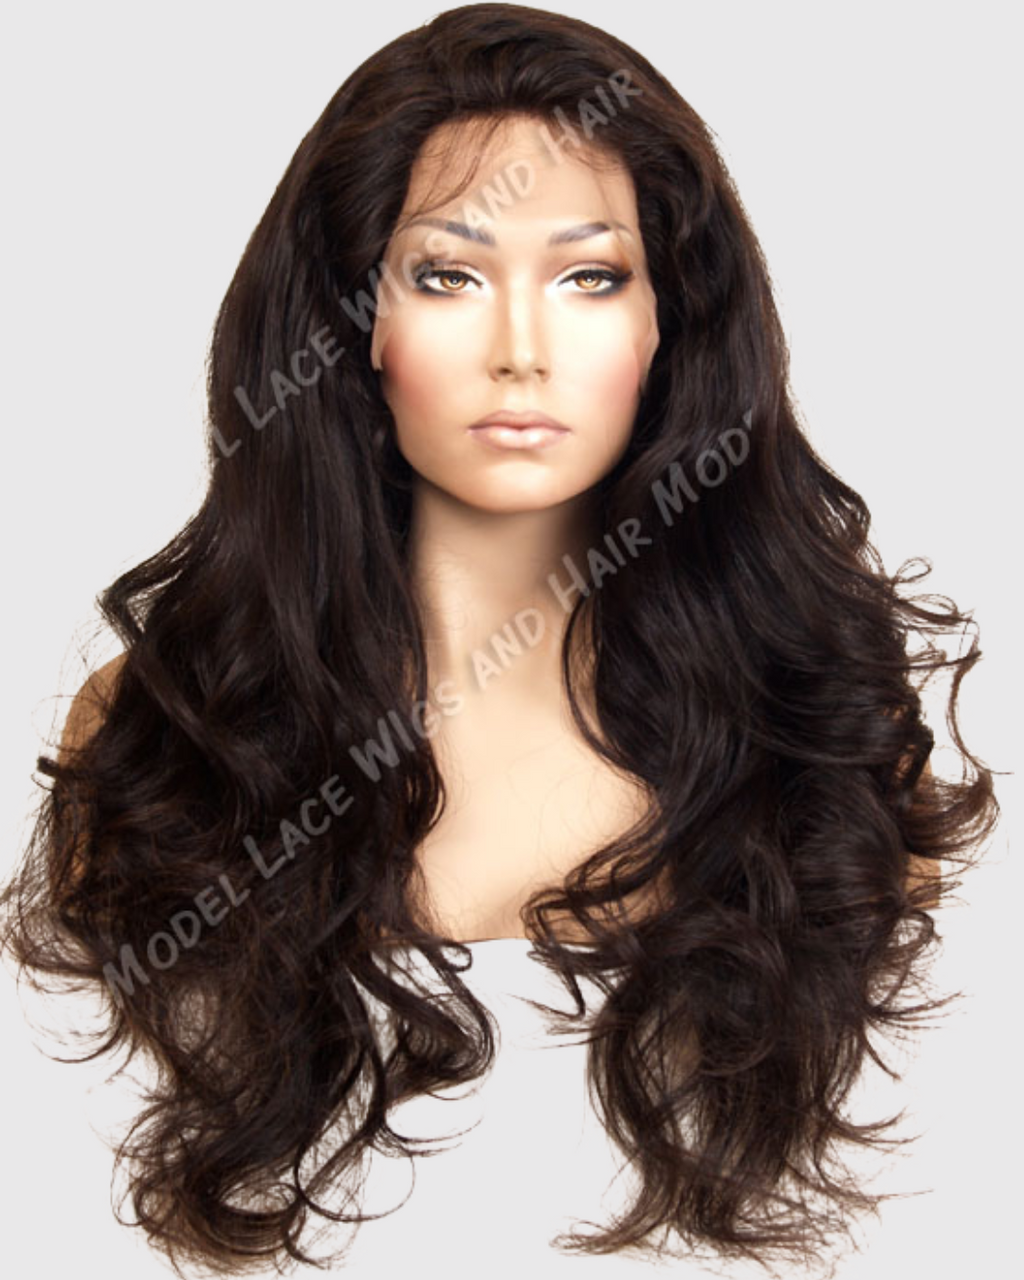 Full Lace Wig | 100% Hand-Tied Virgin Human Hair | Bodywave | (Basilia) Item#: 5655